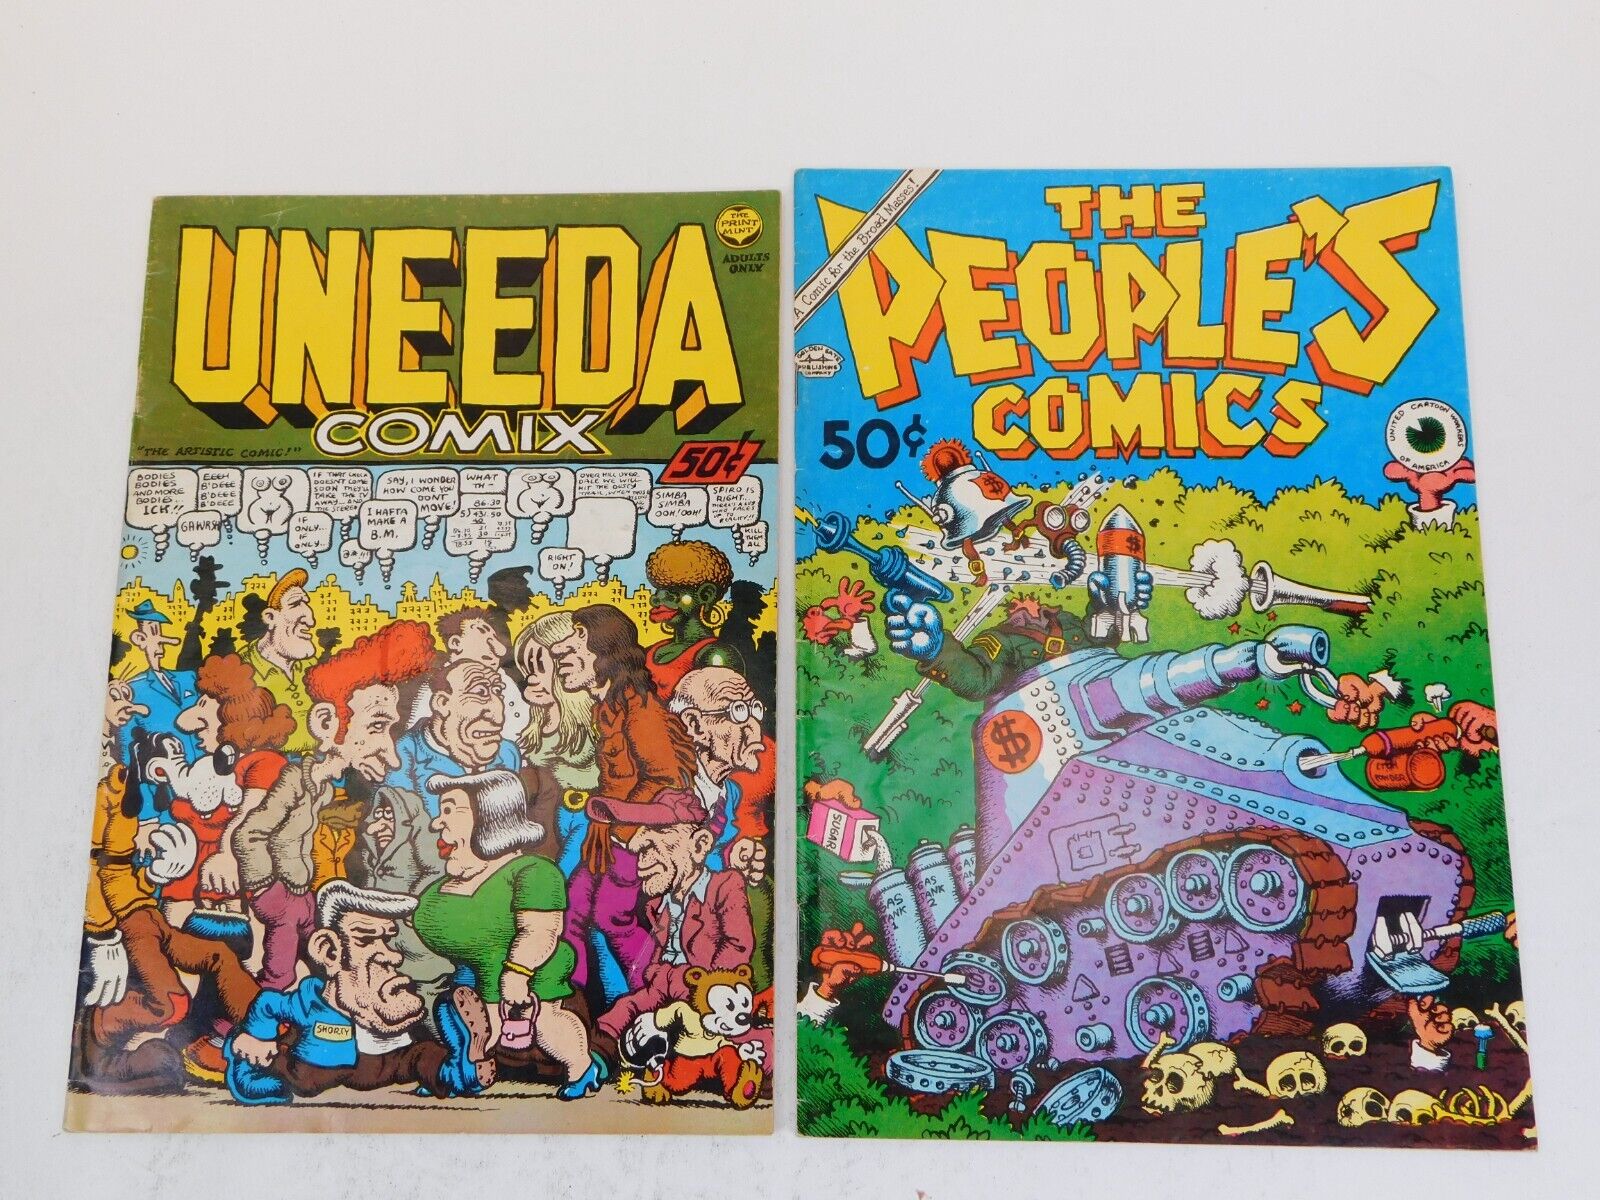 Uneeda Comix & Peoples Comics FN 6.0 - R Crumb 1st Print Underground Comic Lot